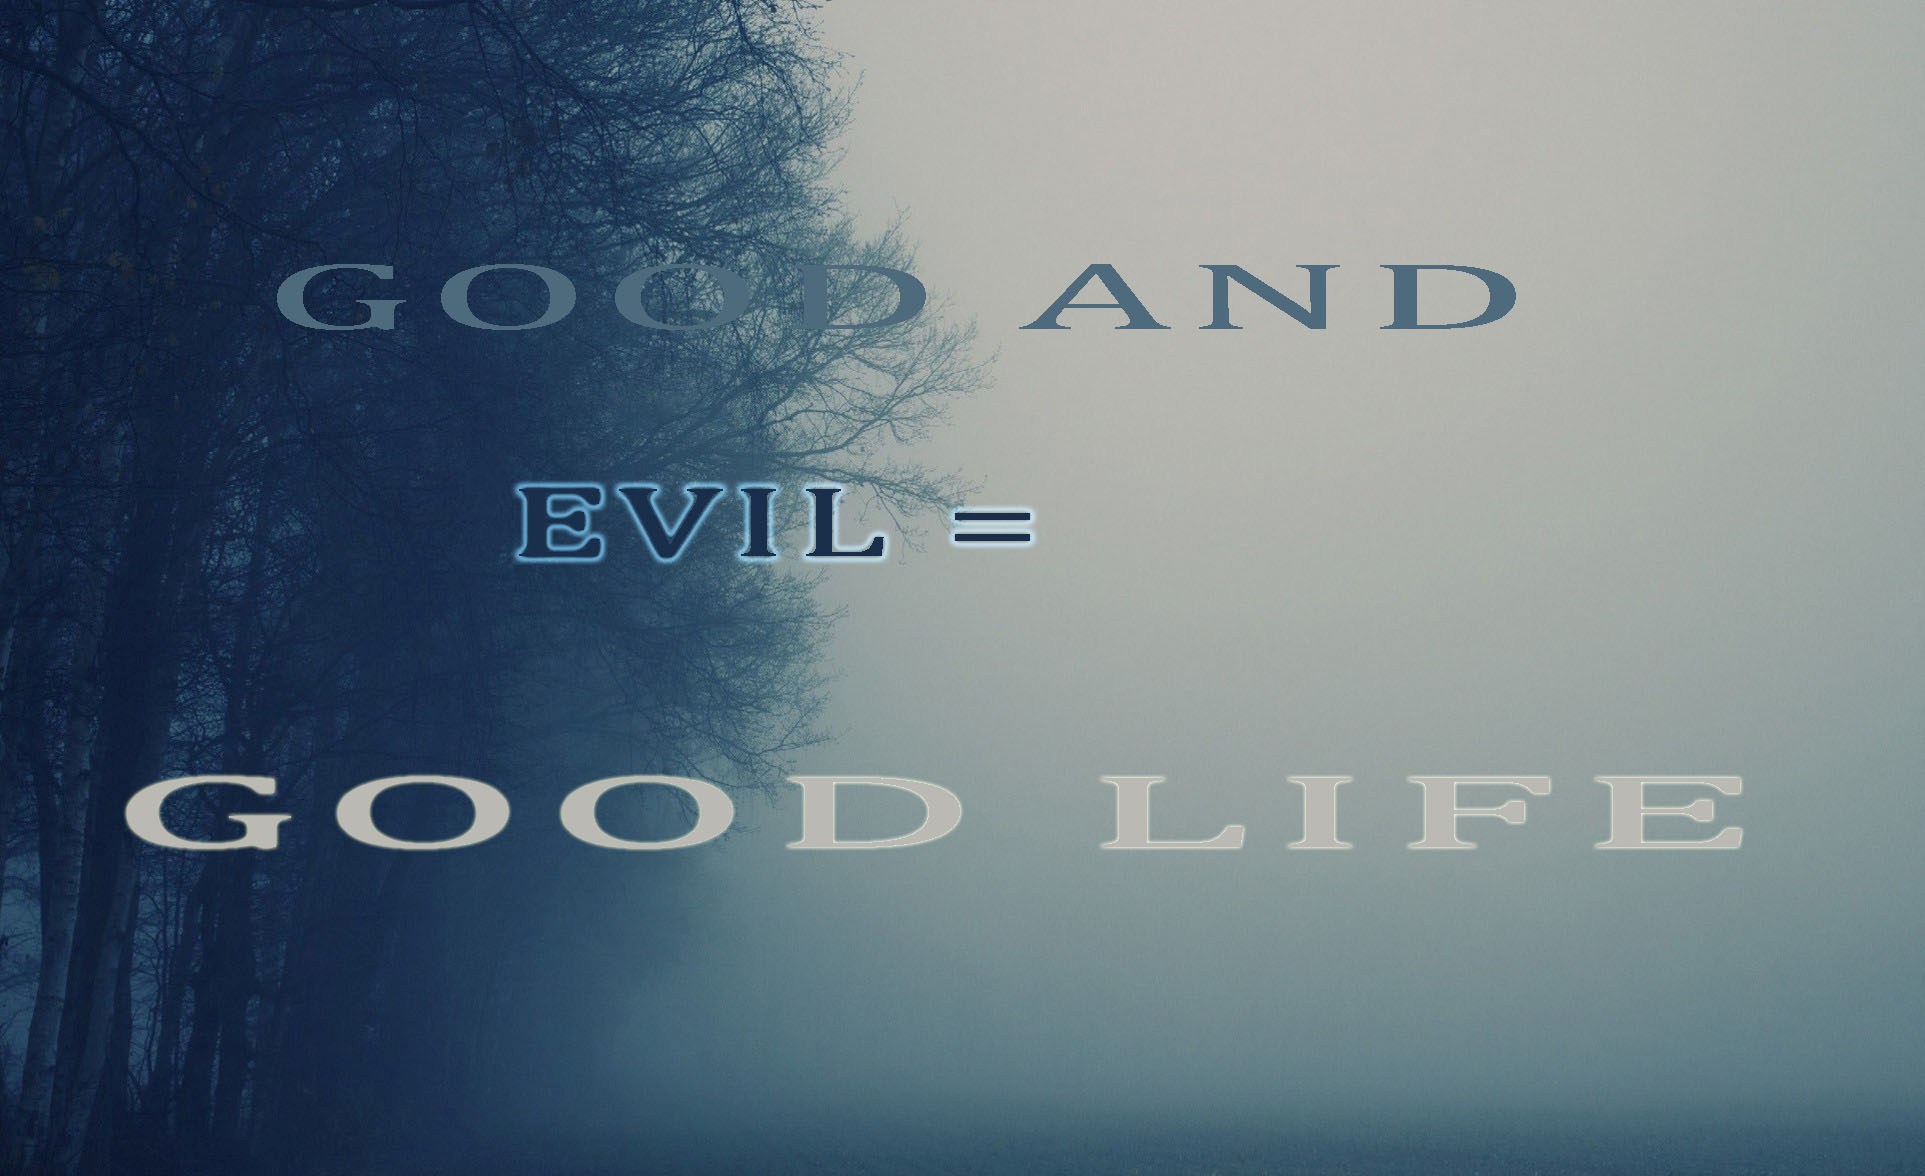 Good and Evil = Good Live samcro.fr samcro.fr